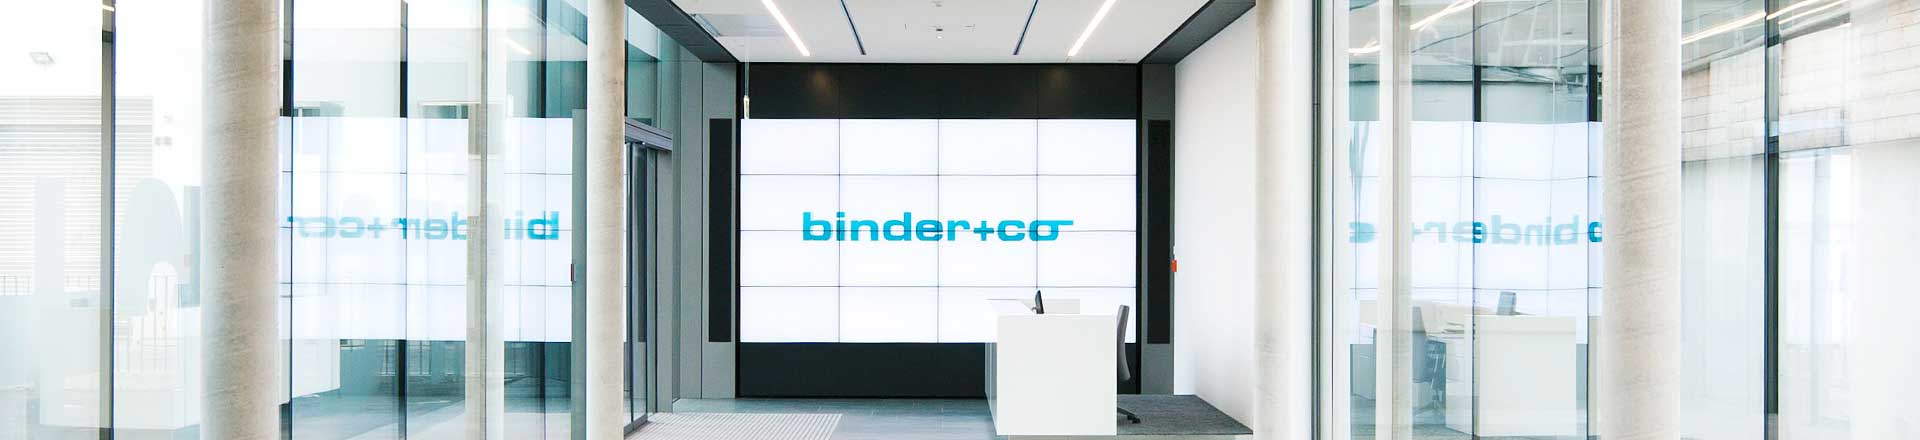 Binder+Co